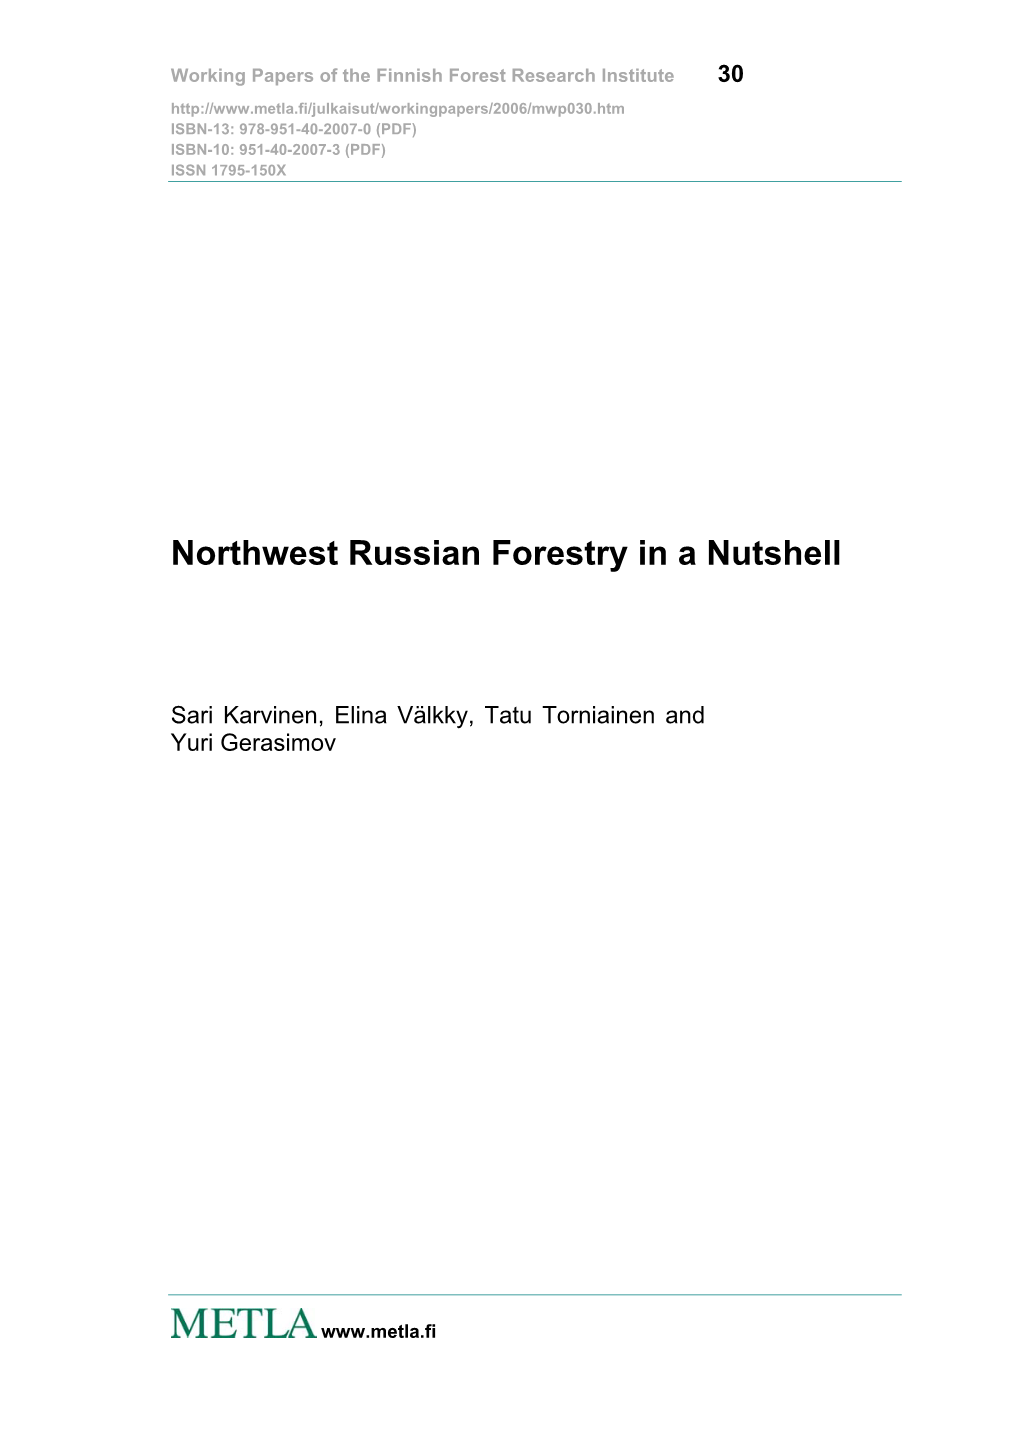 Northwest Russian Forestry in a Nutshell